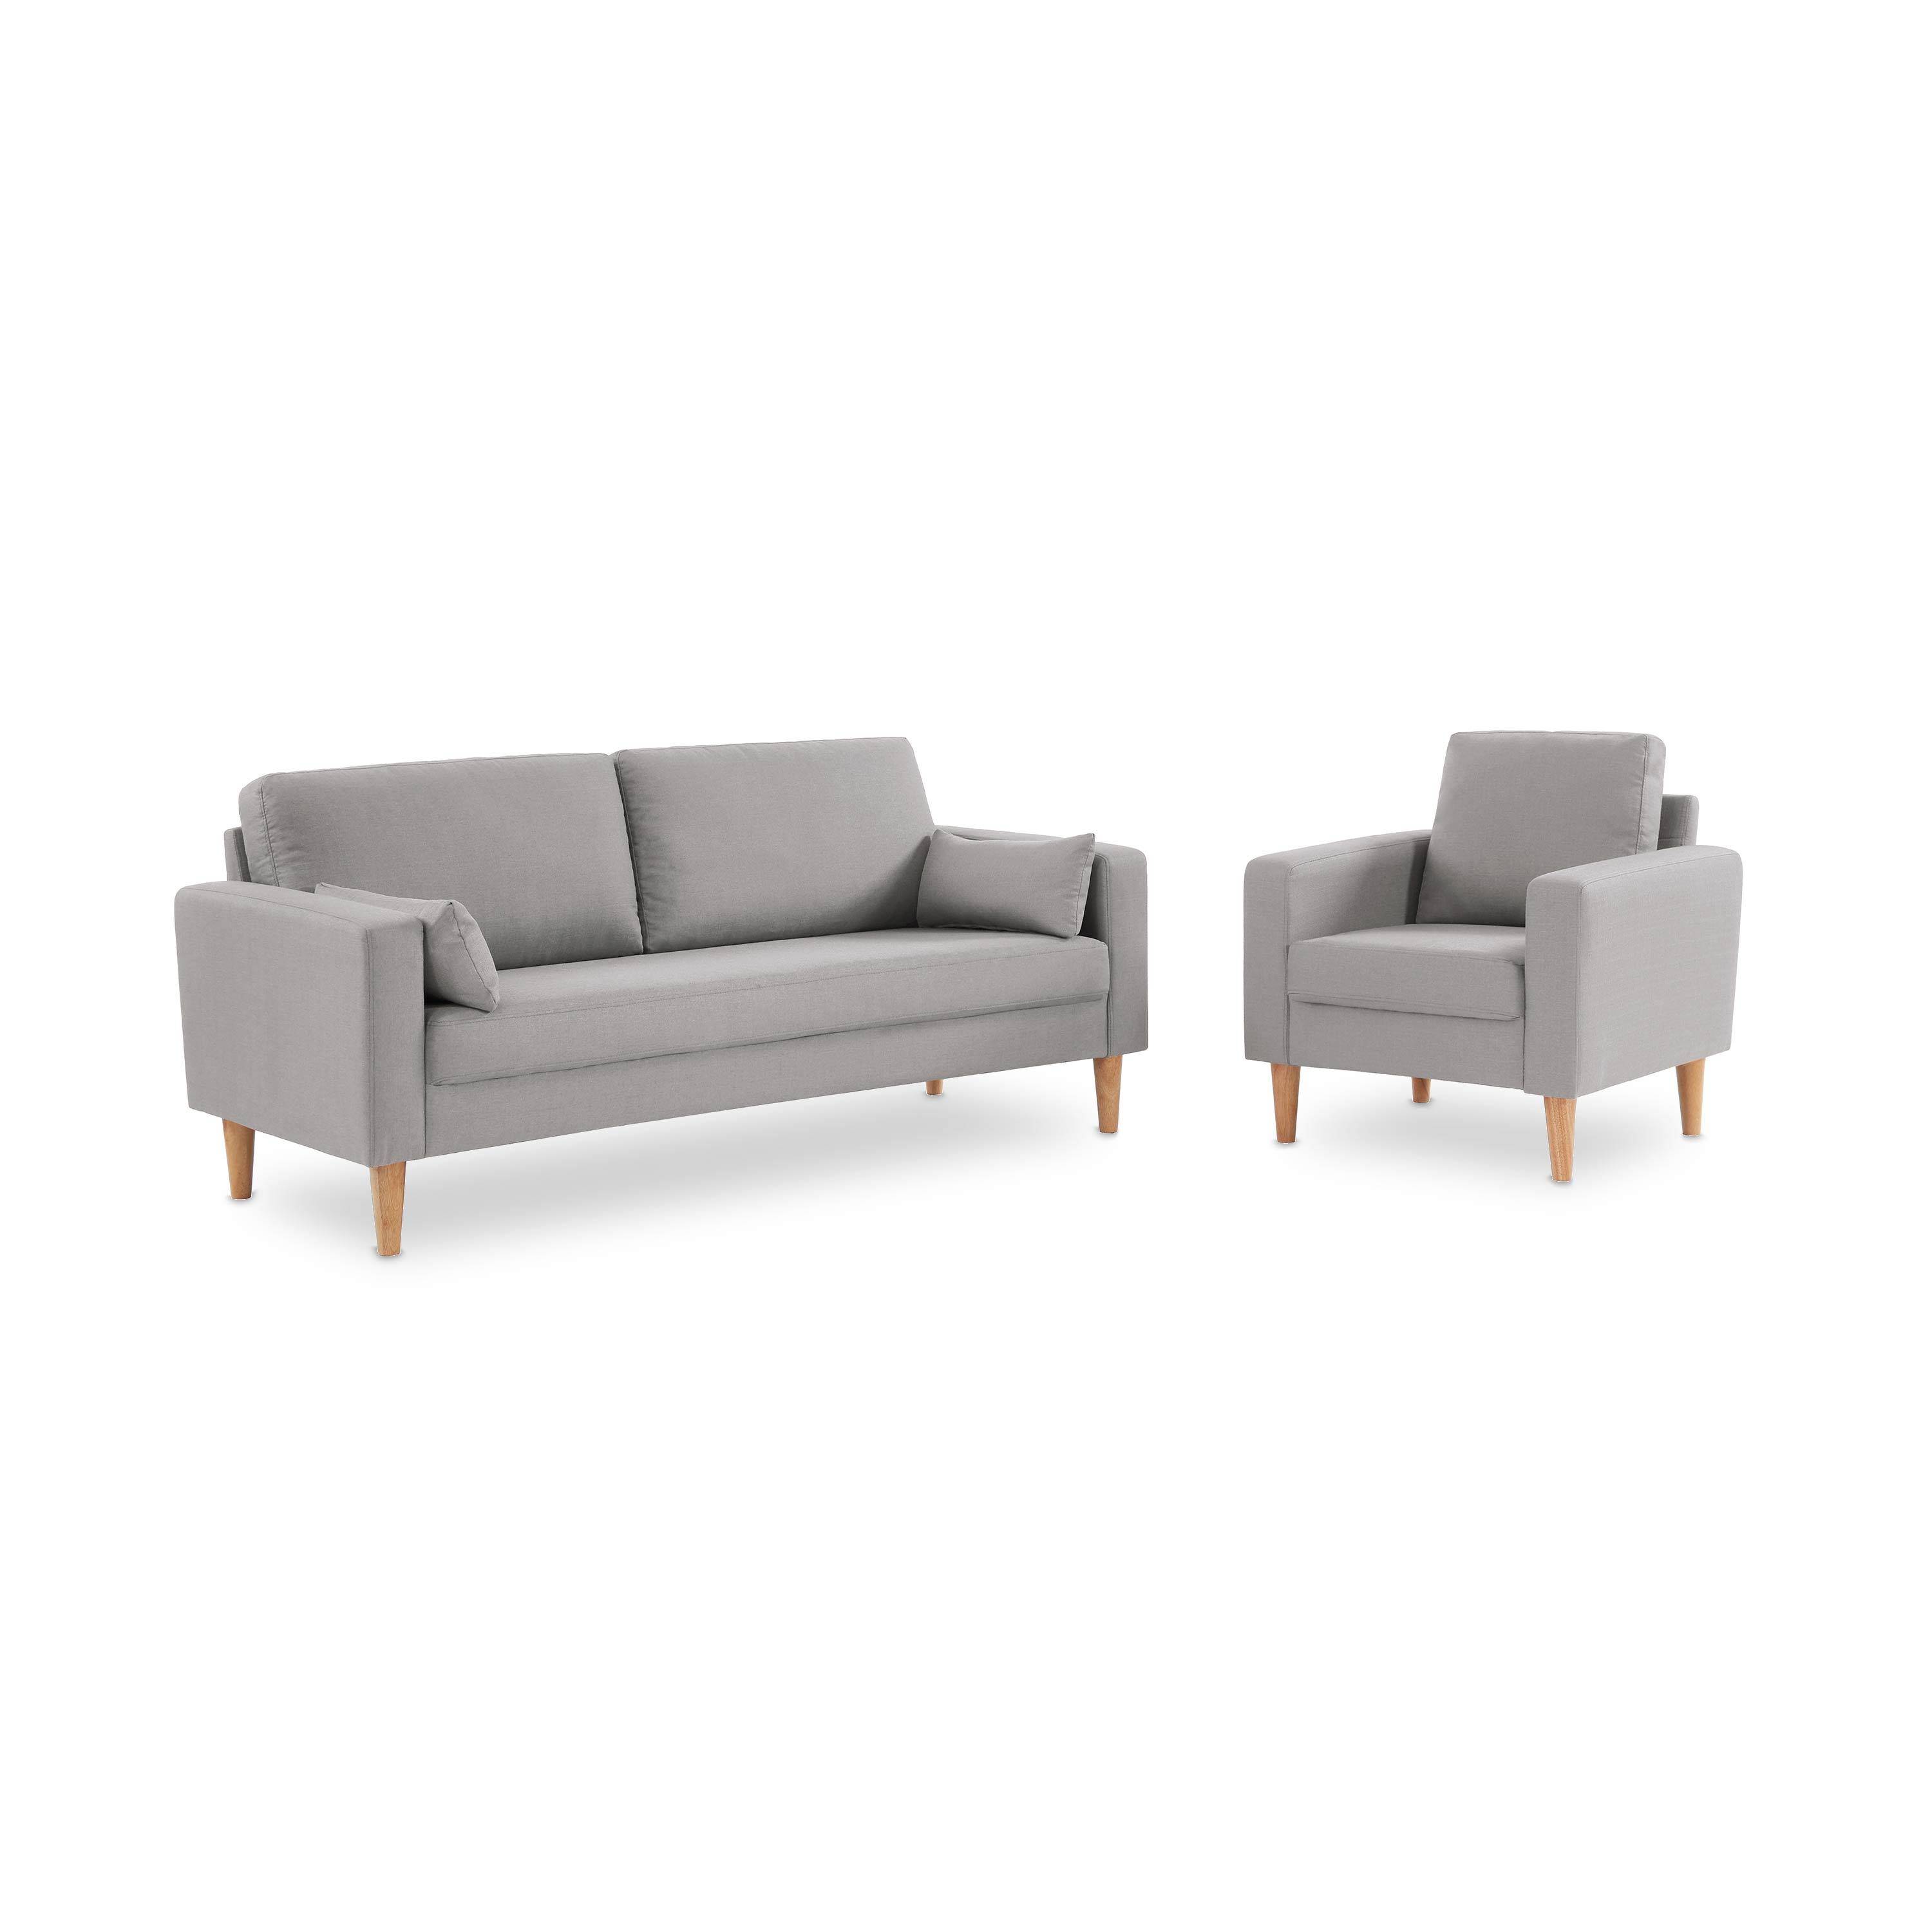 Scandi-style armchair with wooden legs - Bjorn - Light Grey Photo5